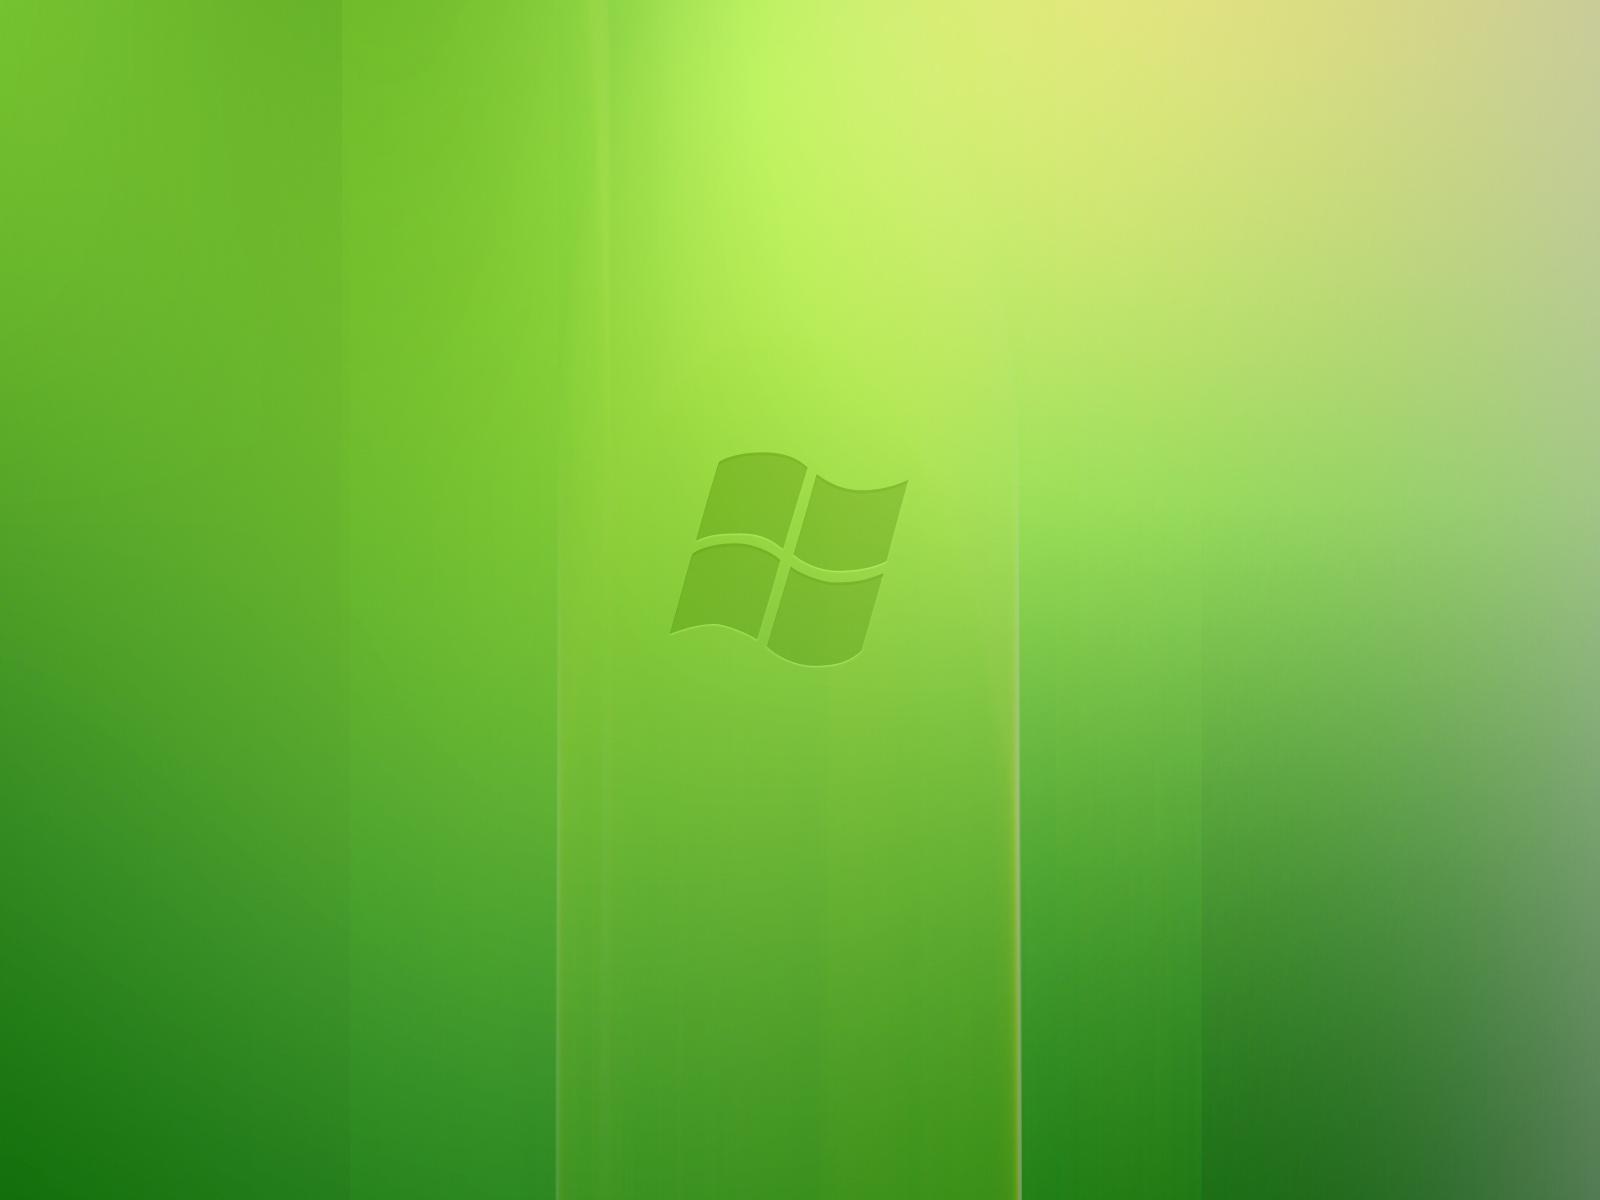 windows-8-green-logo-hd-wallpaper | Windows HD Wallpapers ...